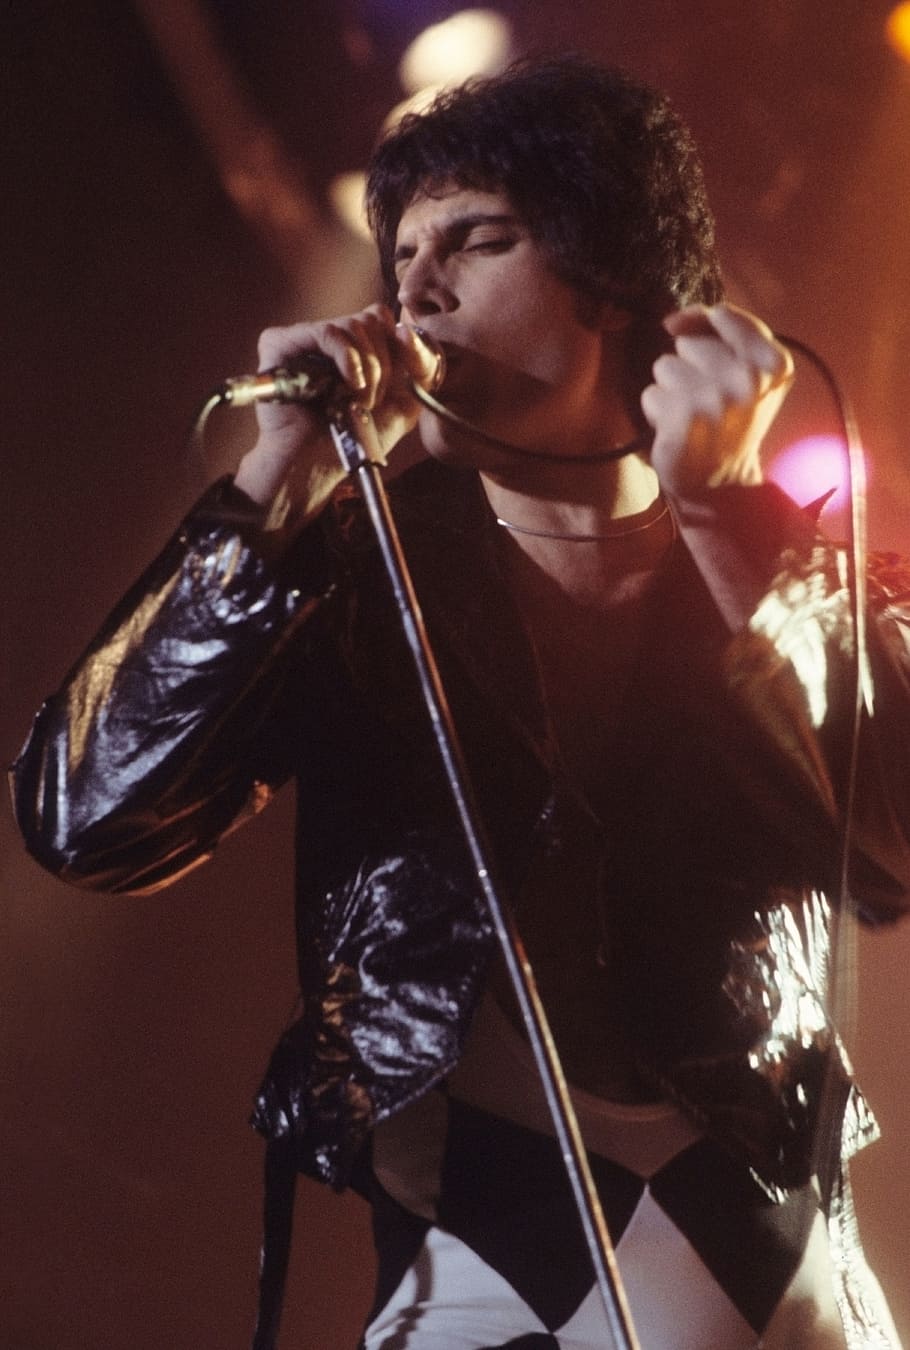 man holding microphone while singing, freddie mercury, singer